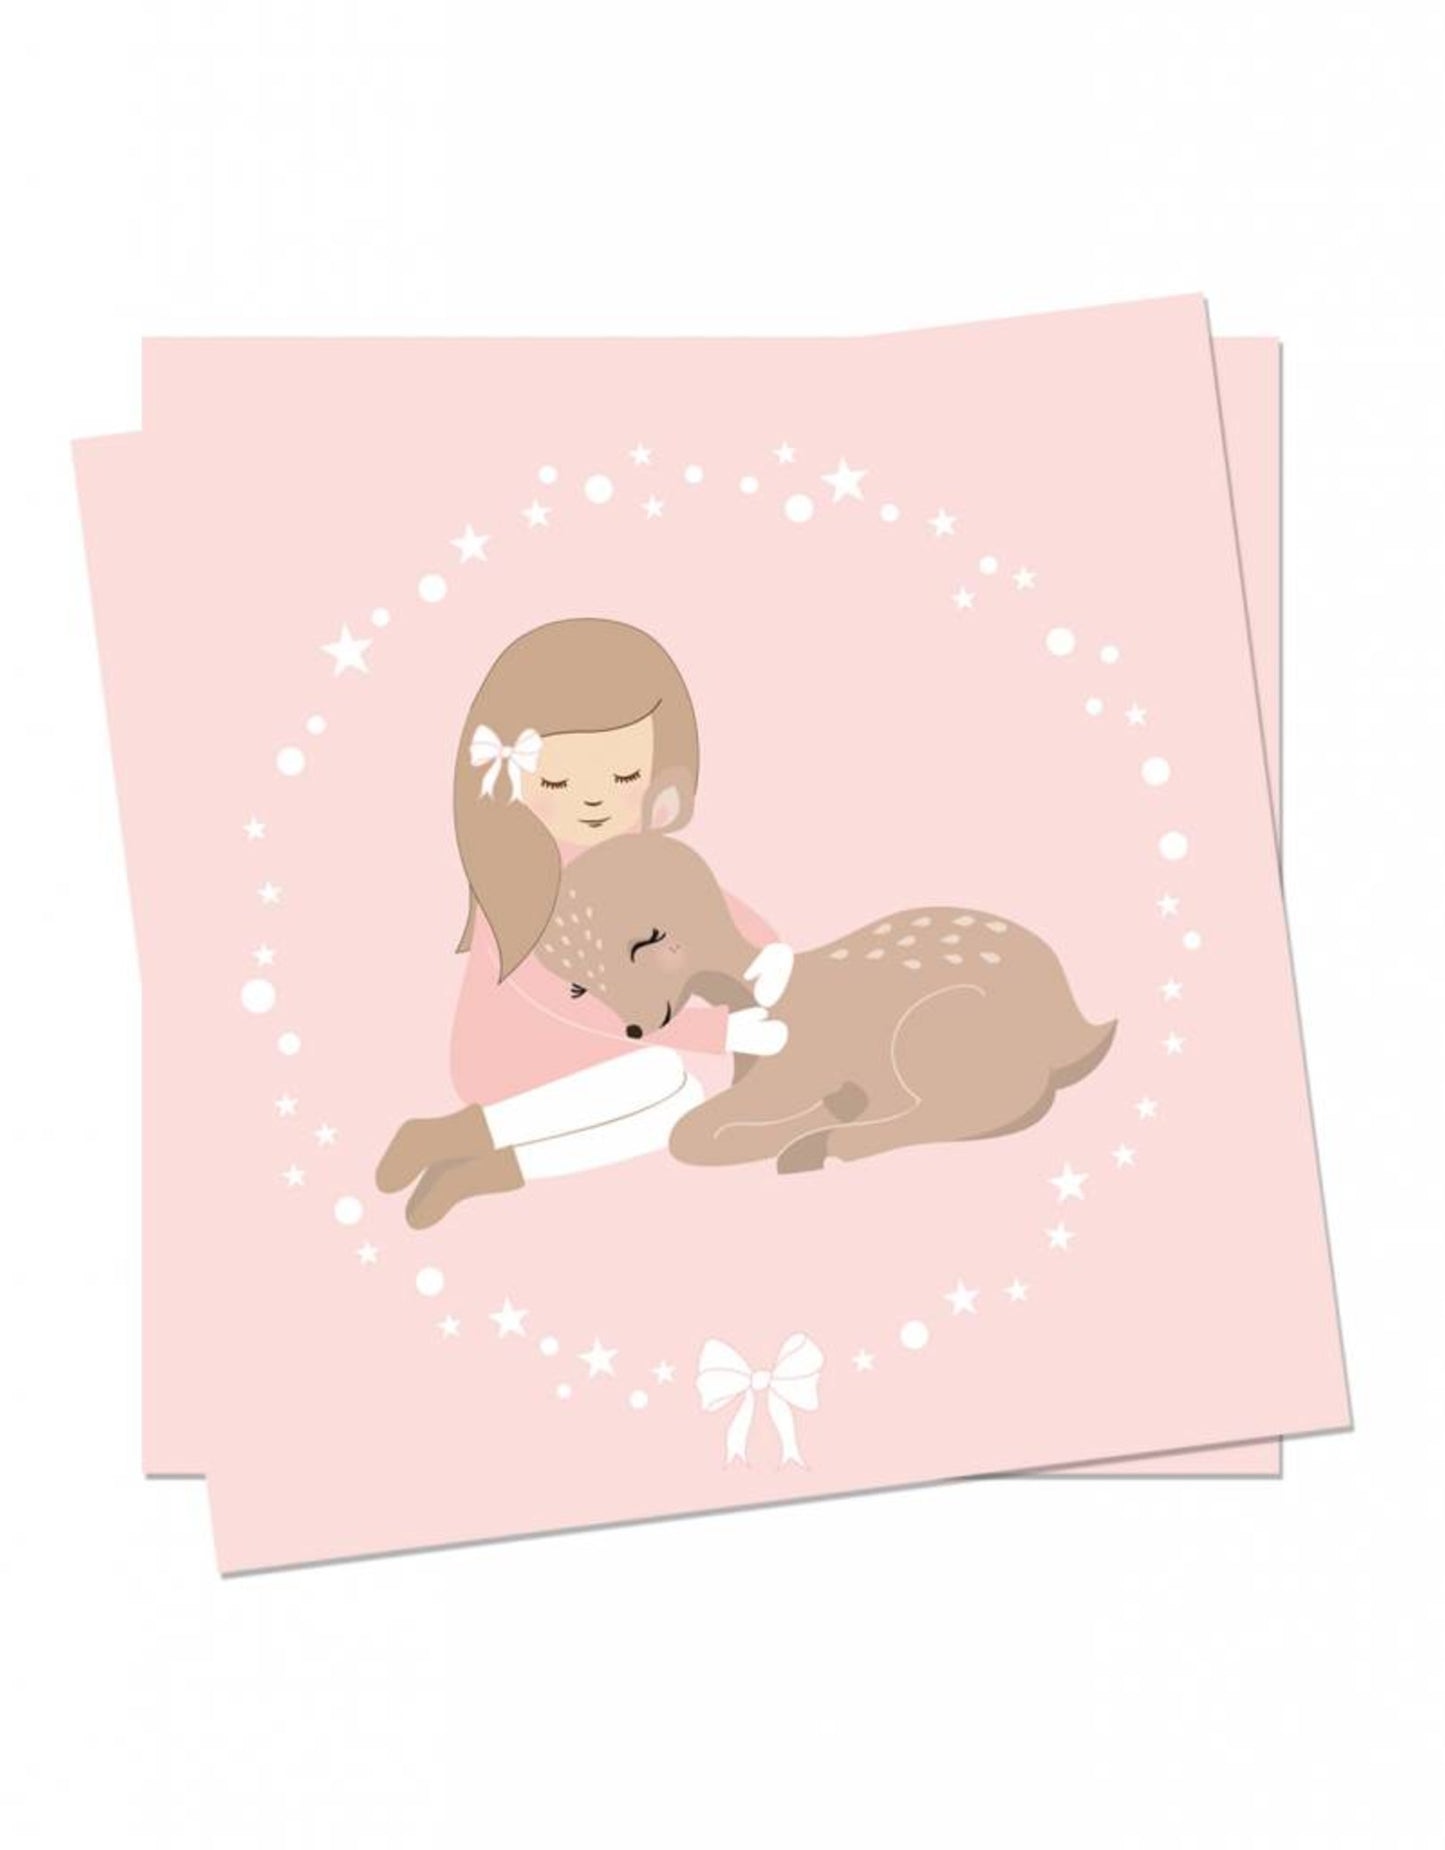 Greeting Card "Winter Girl"